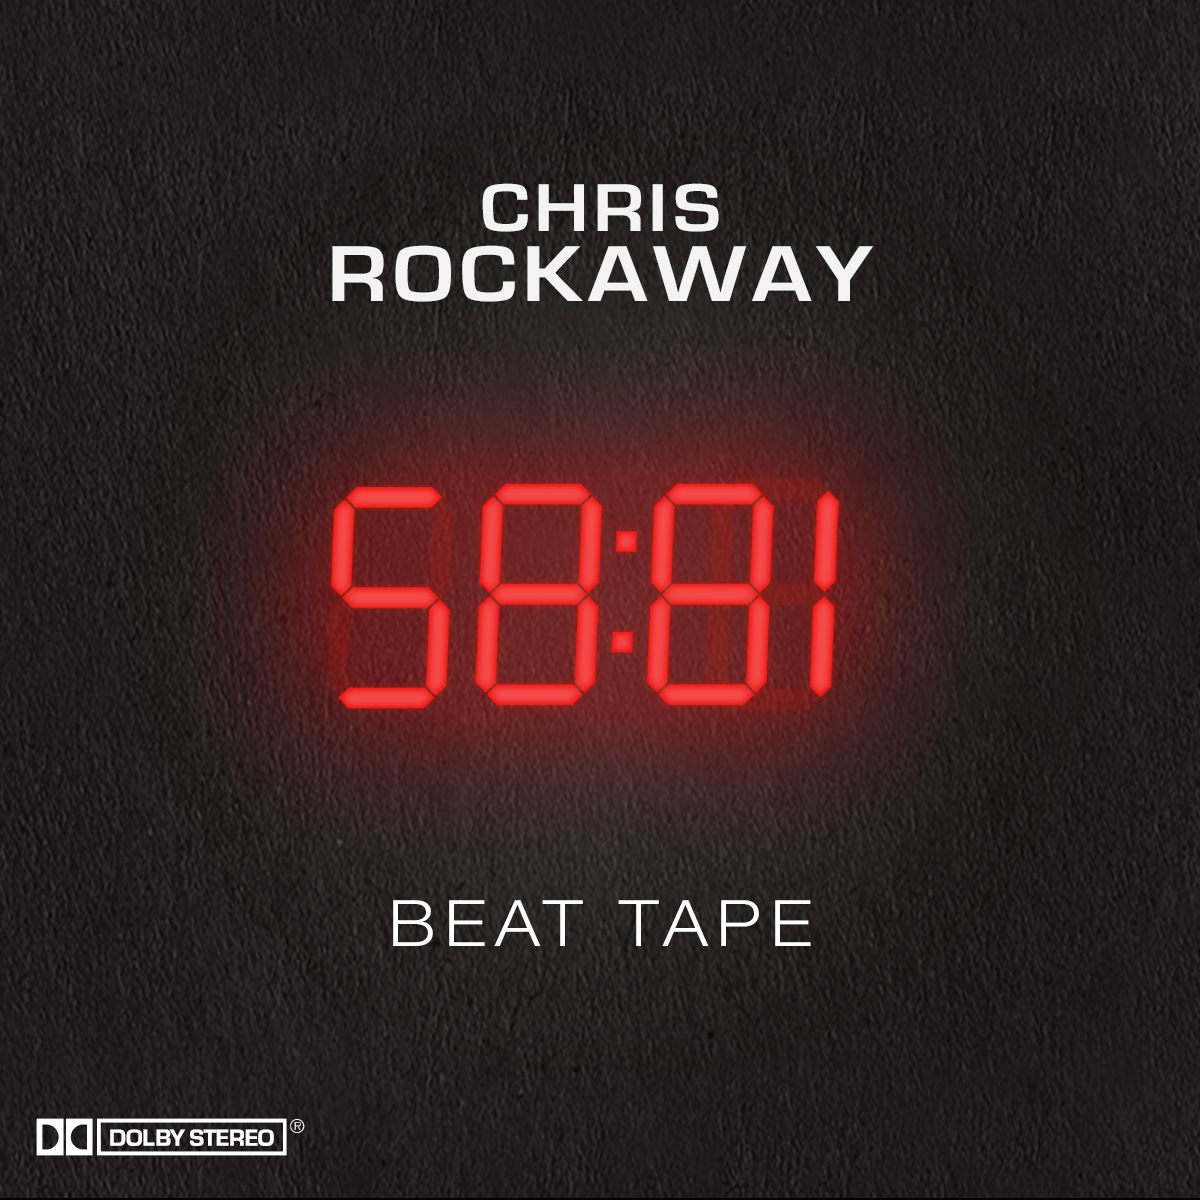 Chris Rockaway – 5881 [beat tape]